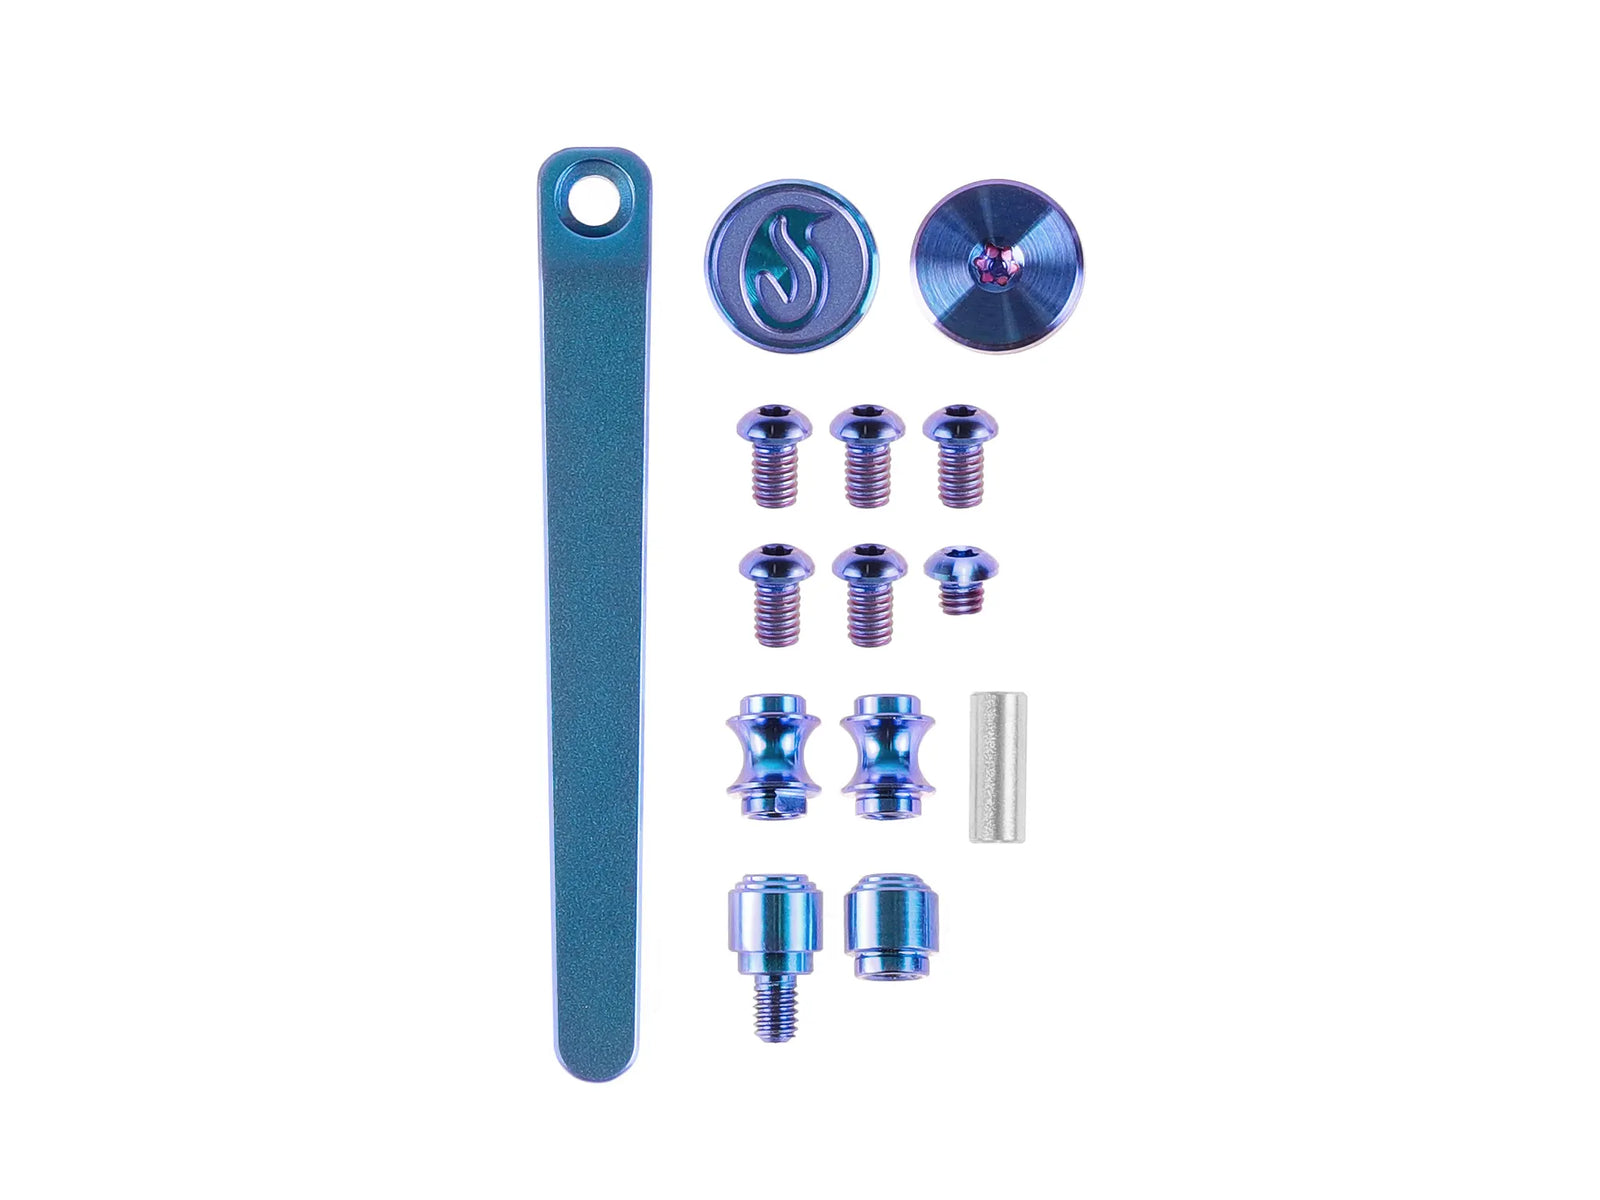 Kaviso x QSP Penguin Titanium Frame Lock Hardware Kit - Blue